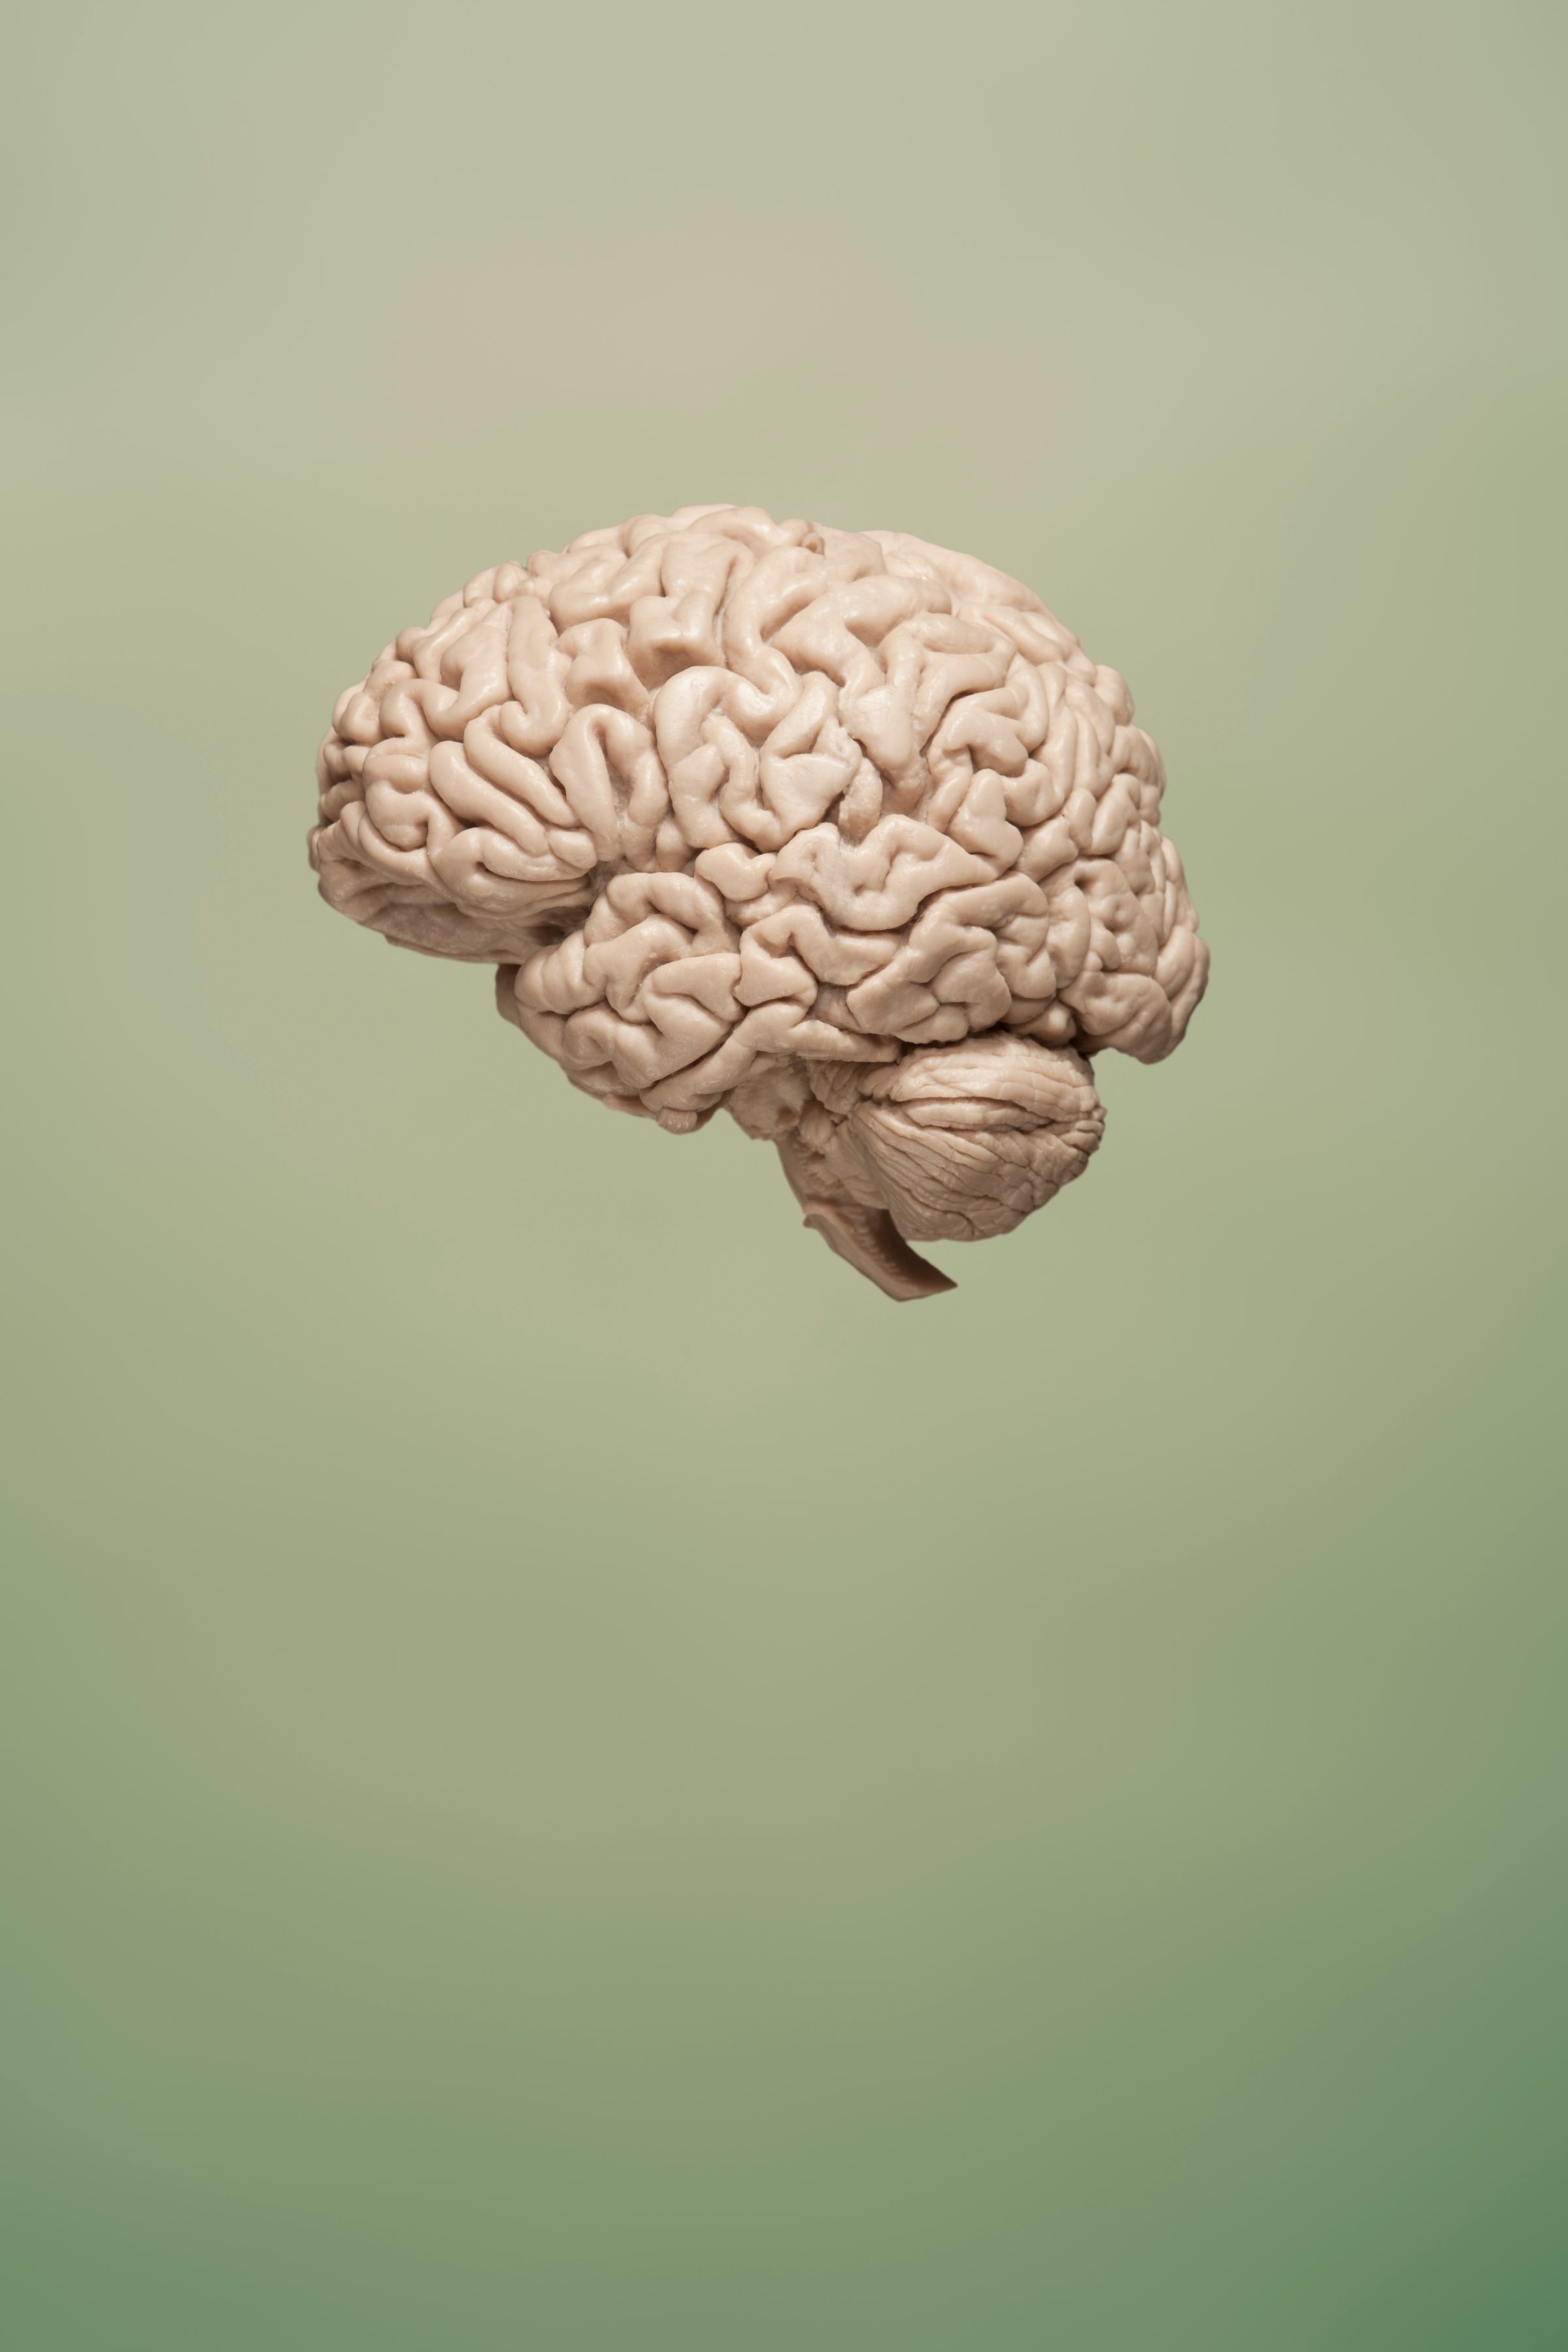 Brain on green background